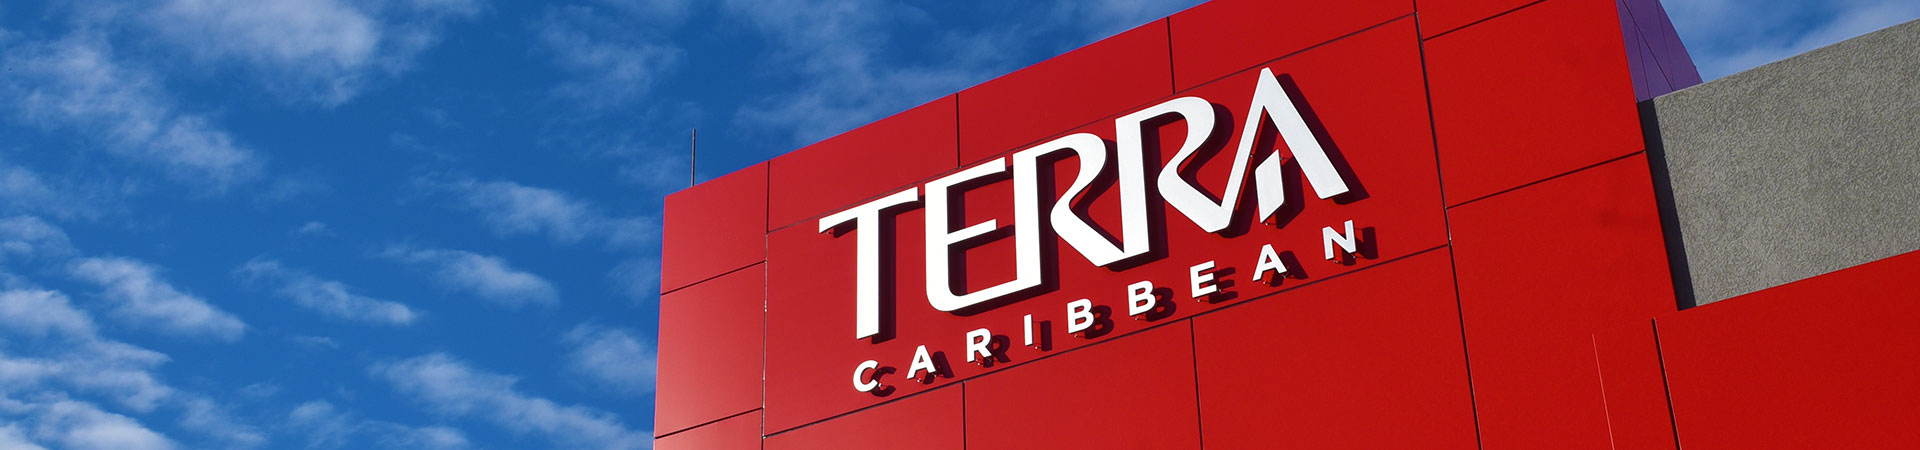 Terra Caribbean - Blog